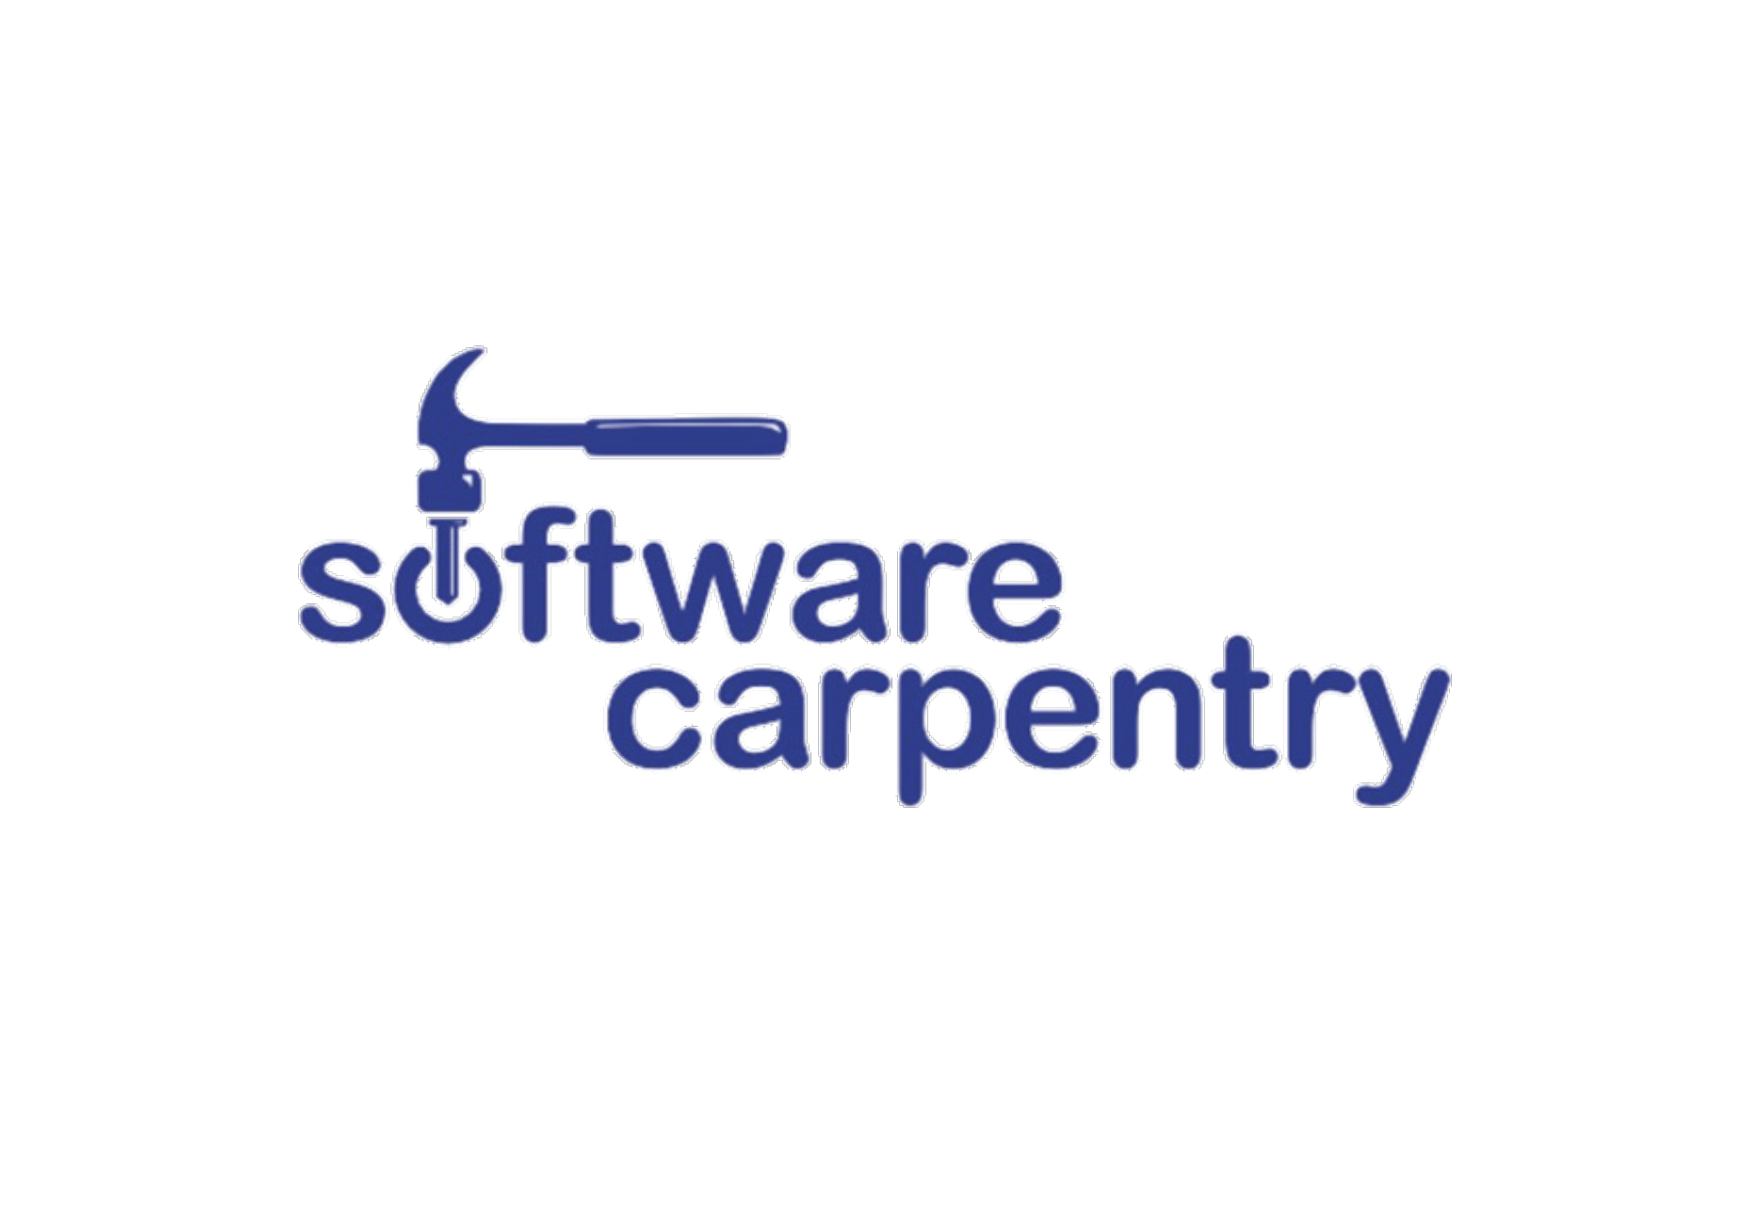 Holland Computing Center Software Carpentry Workshop